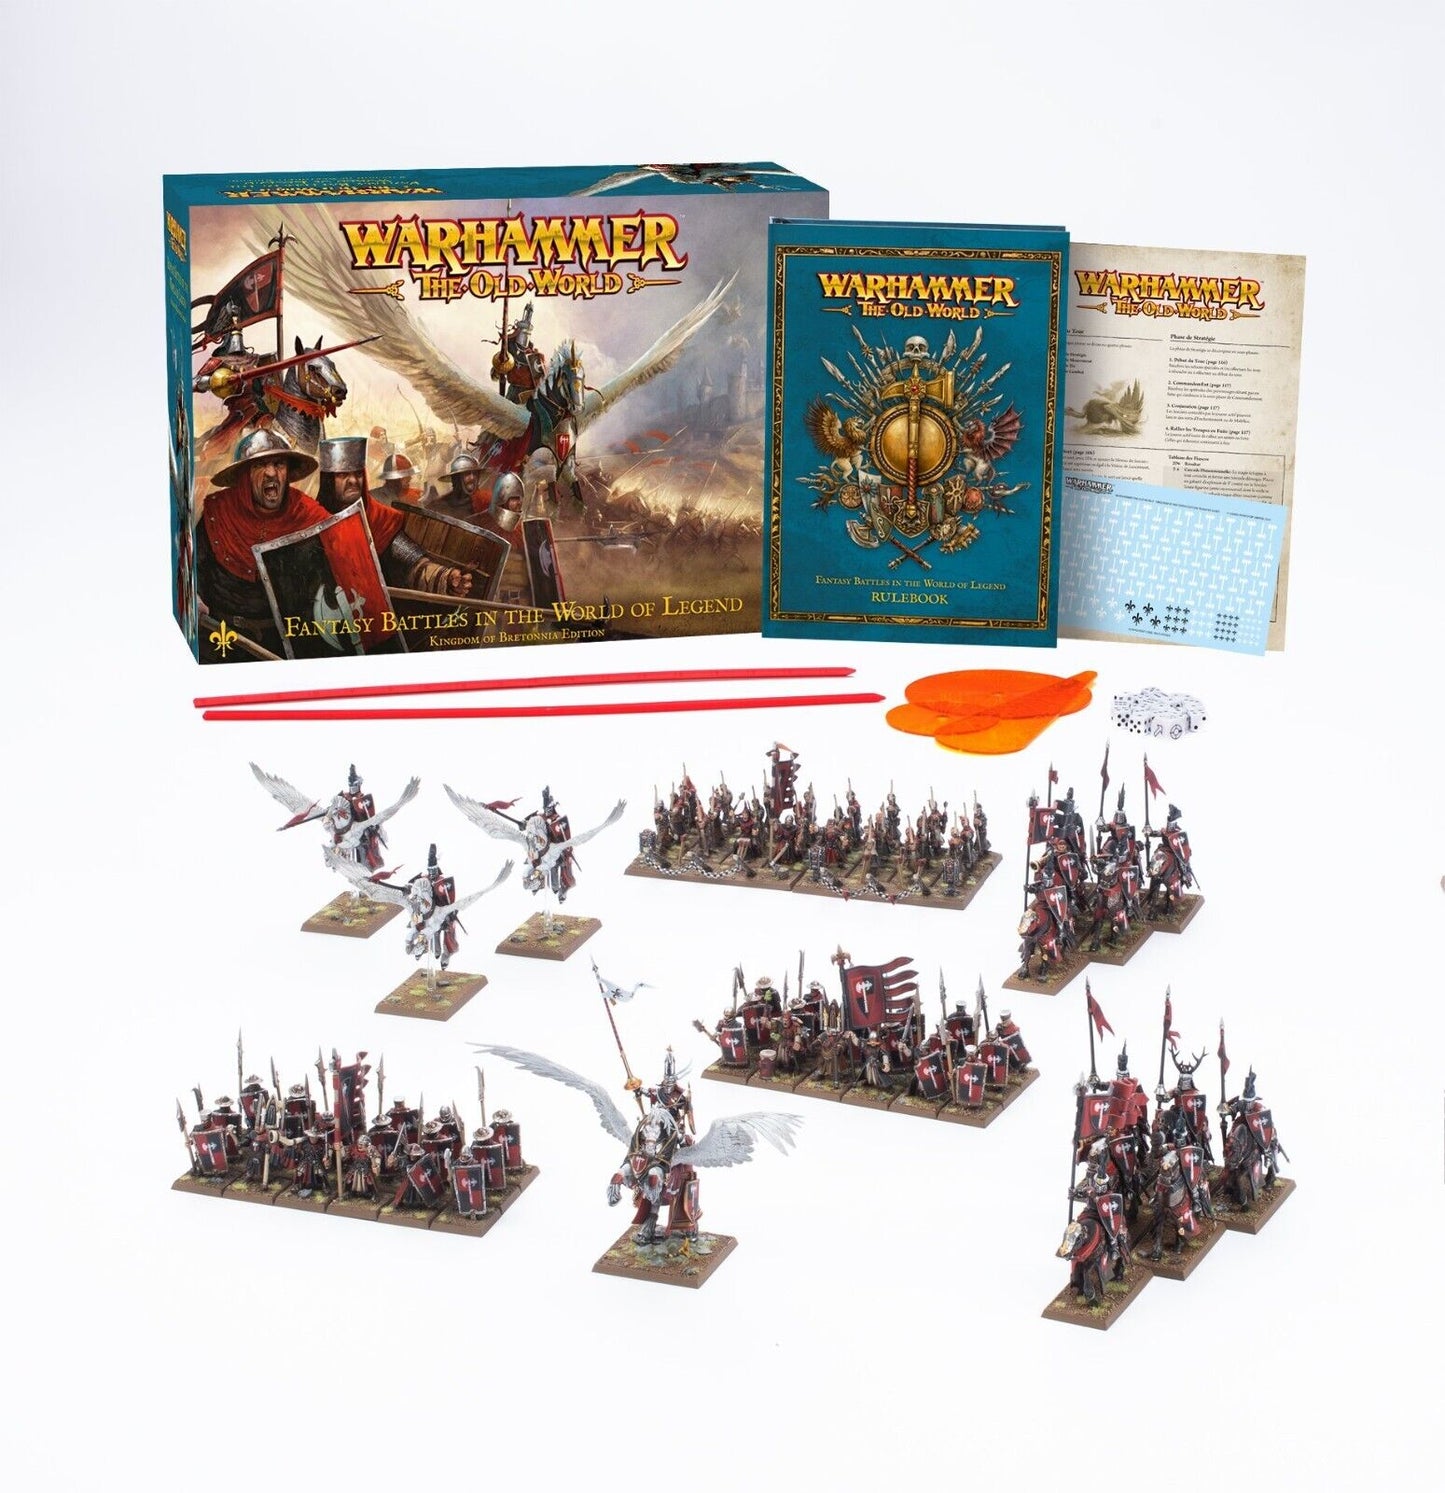 Warhammer: The Old World Core Set – Kingdom of Bretonnia Edition (PRE-ORDER)